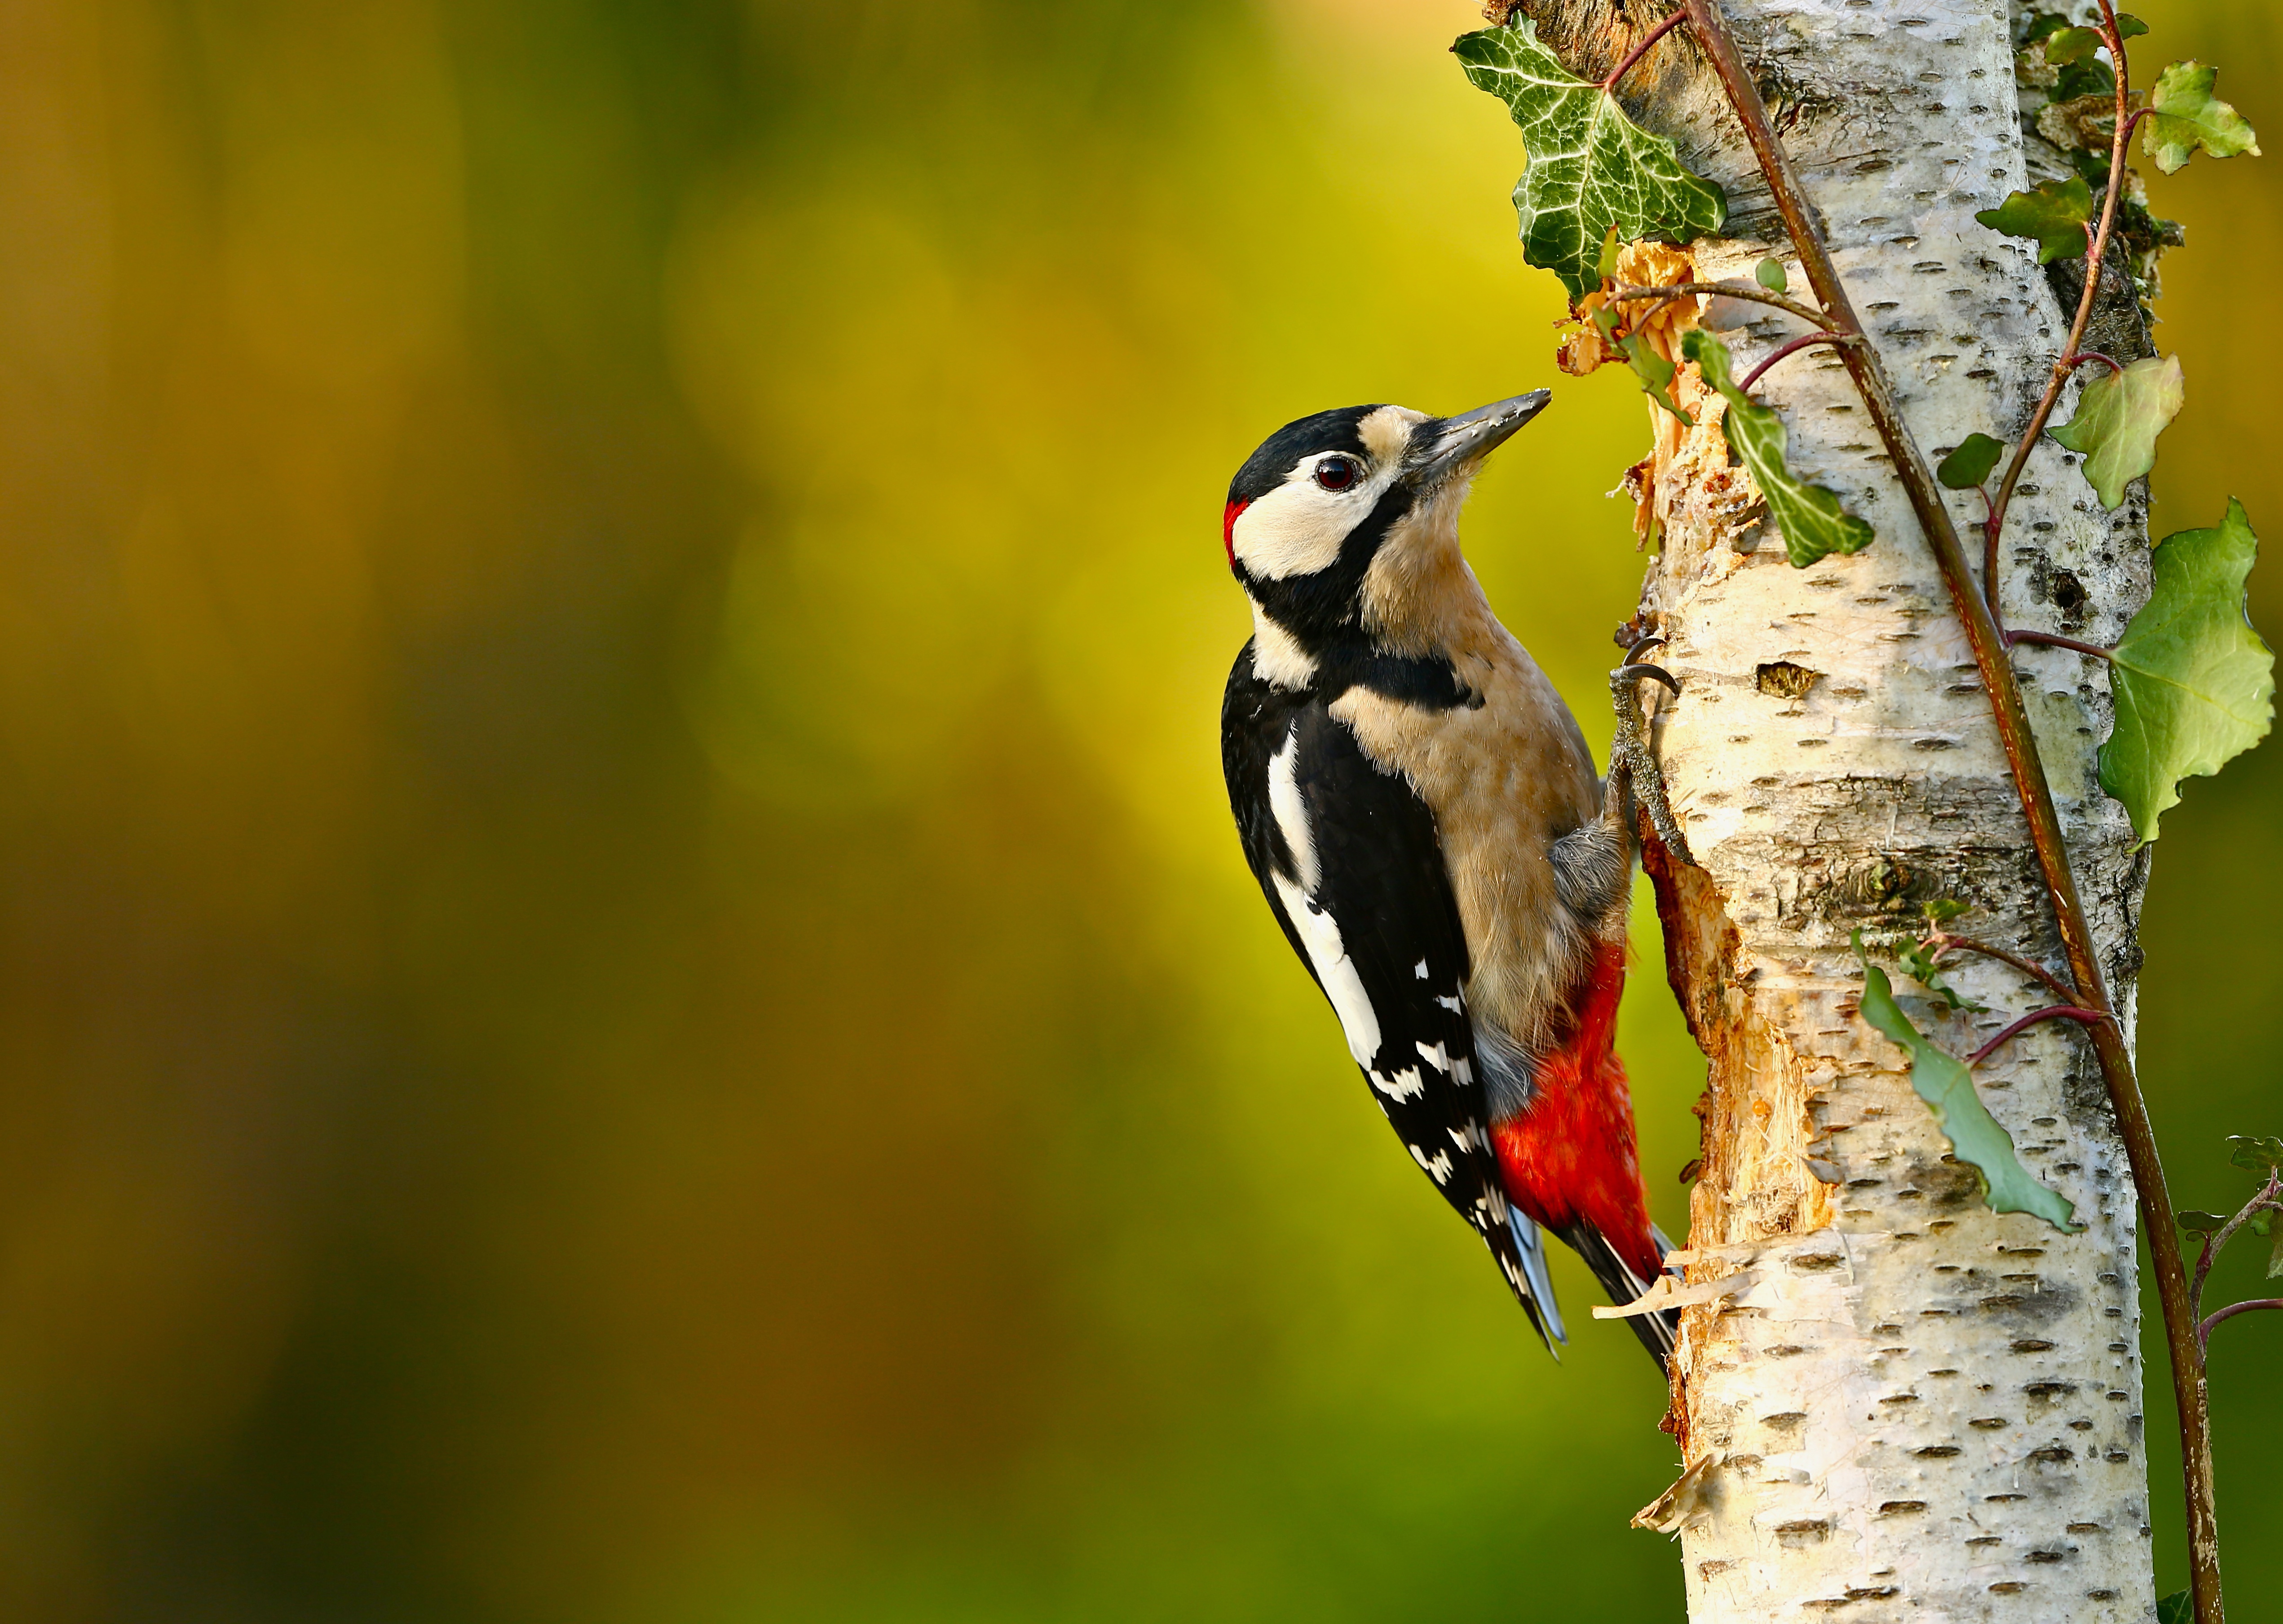 Great Spotted Woodpecker 4k Ultra HD Wallpaper Background Image